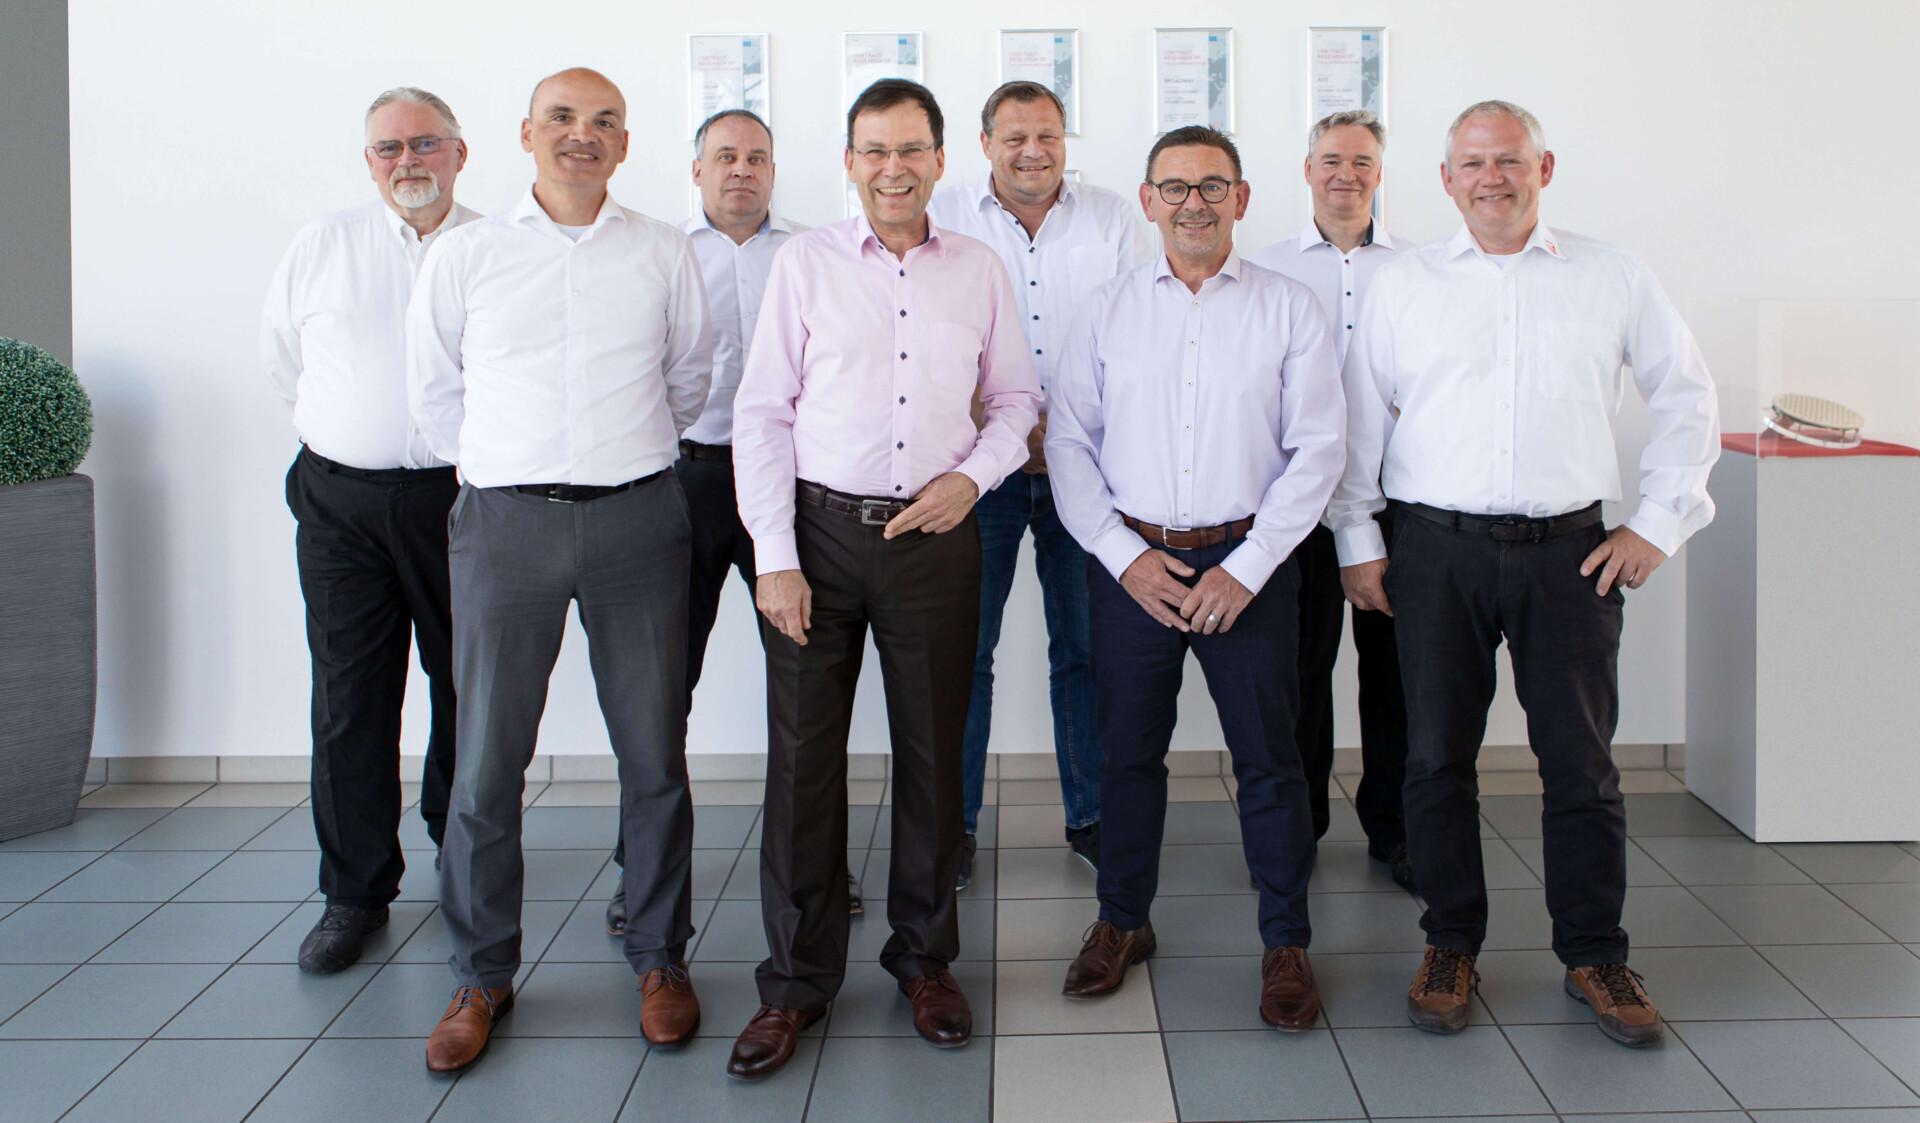 From left to right: Johannes Borkes, Rüdiger Follmann, Frank Henkel, Peter Waldow, Heinz Syrzisko, Arnd Neborg, Matthias Geissler, Jens Lerner.